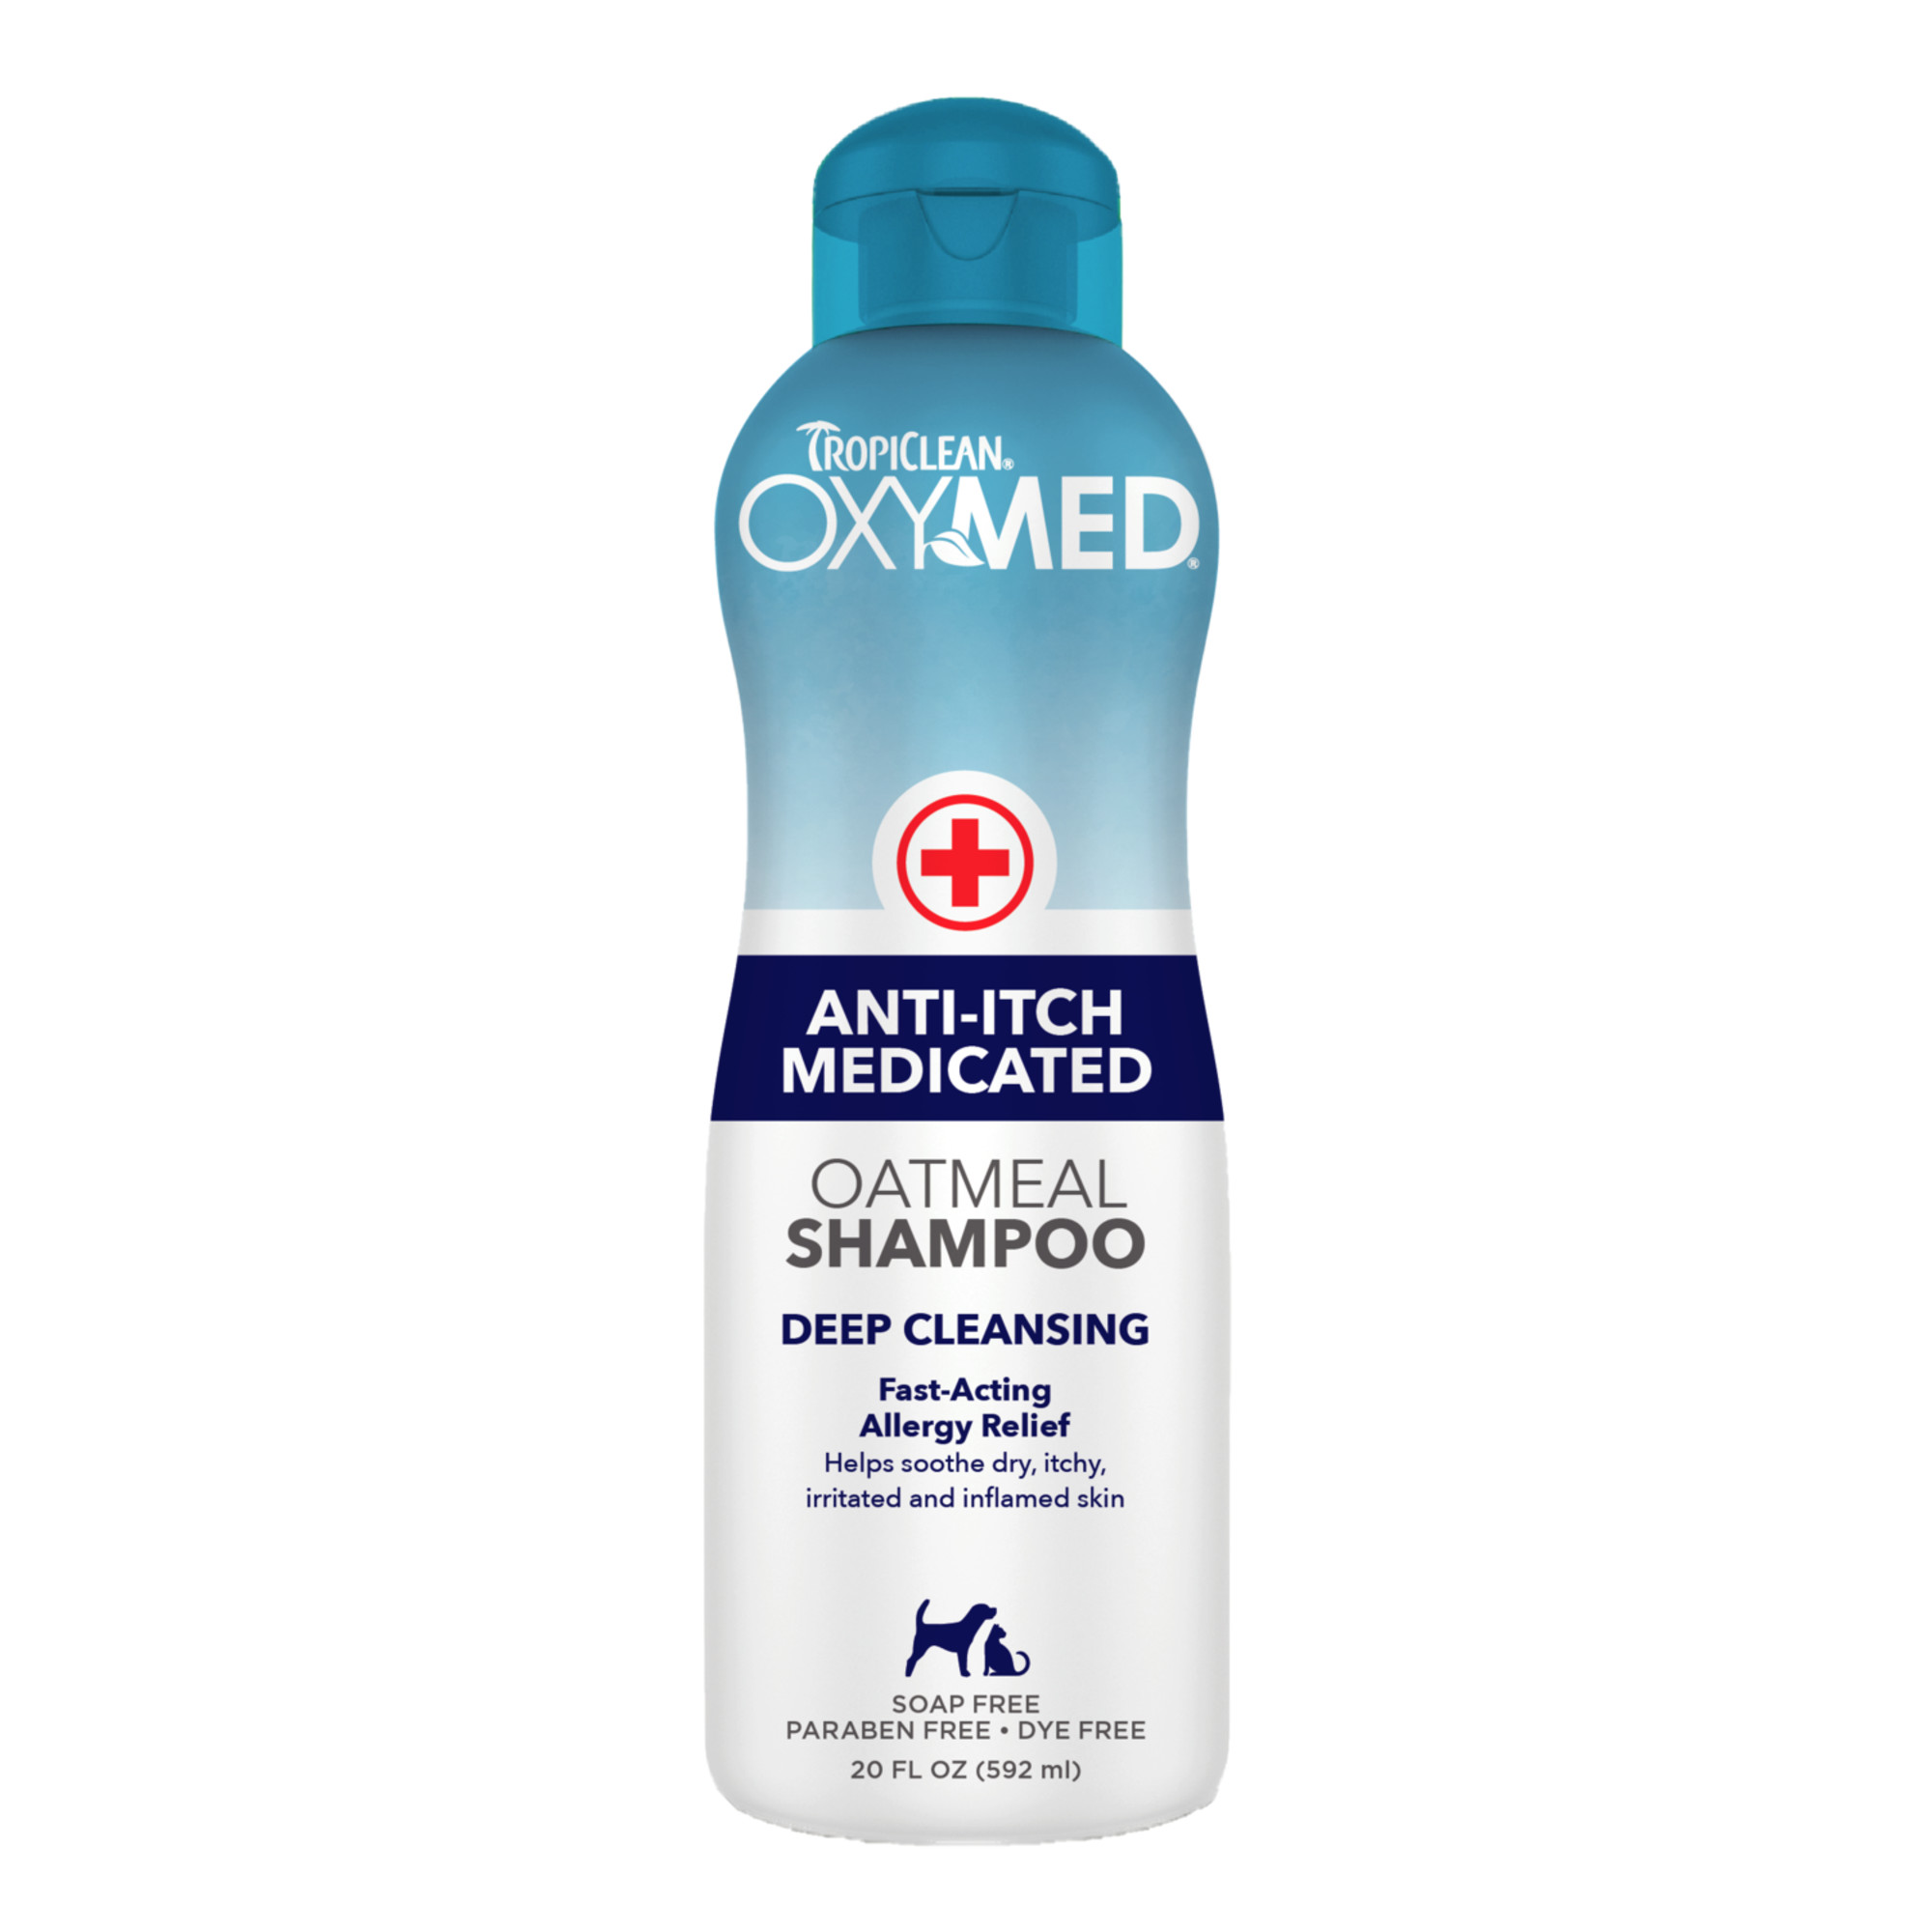 Anti-Itch Medicated Oatmeal Shampoo for Pets